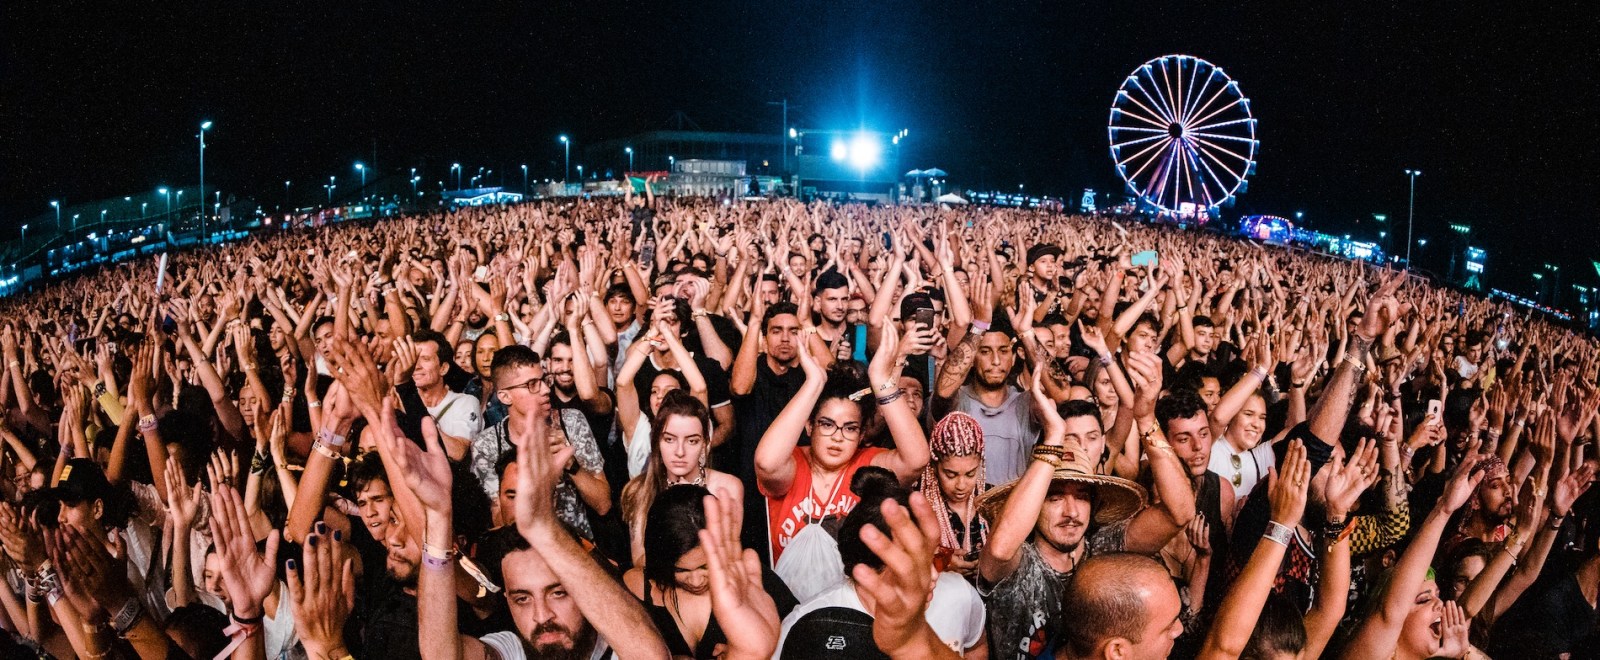 music-festival-crowd-audience-rock-in-rio-getty-full.jpg